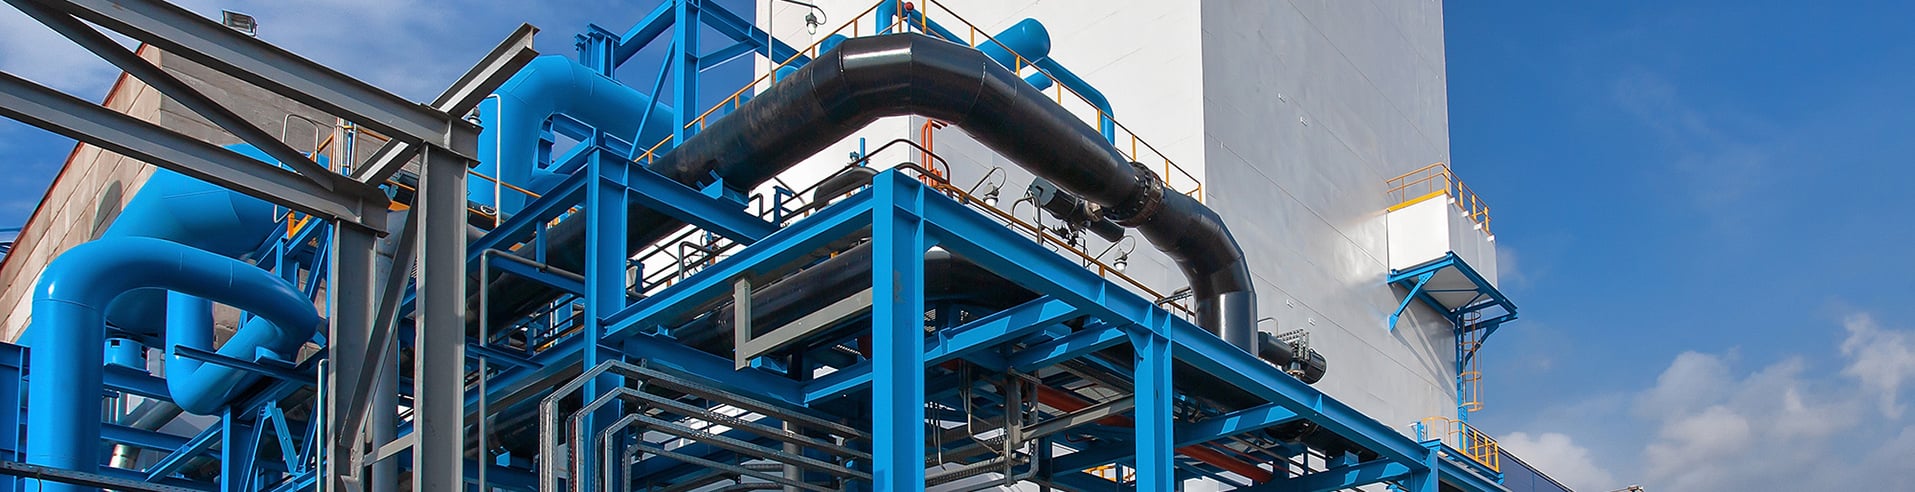 Gas Processing Plant - Air Separation - BAHX - Process Equipment - Repair & Maintenance Services 3